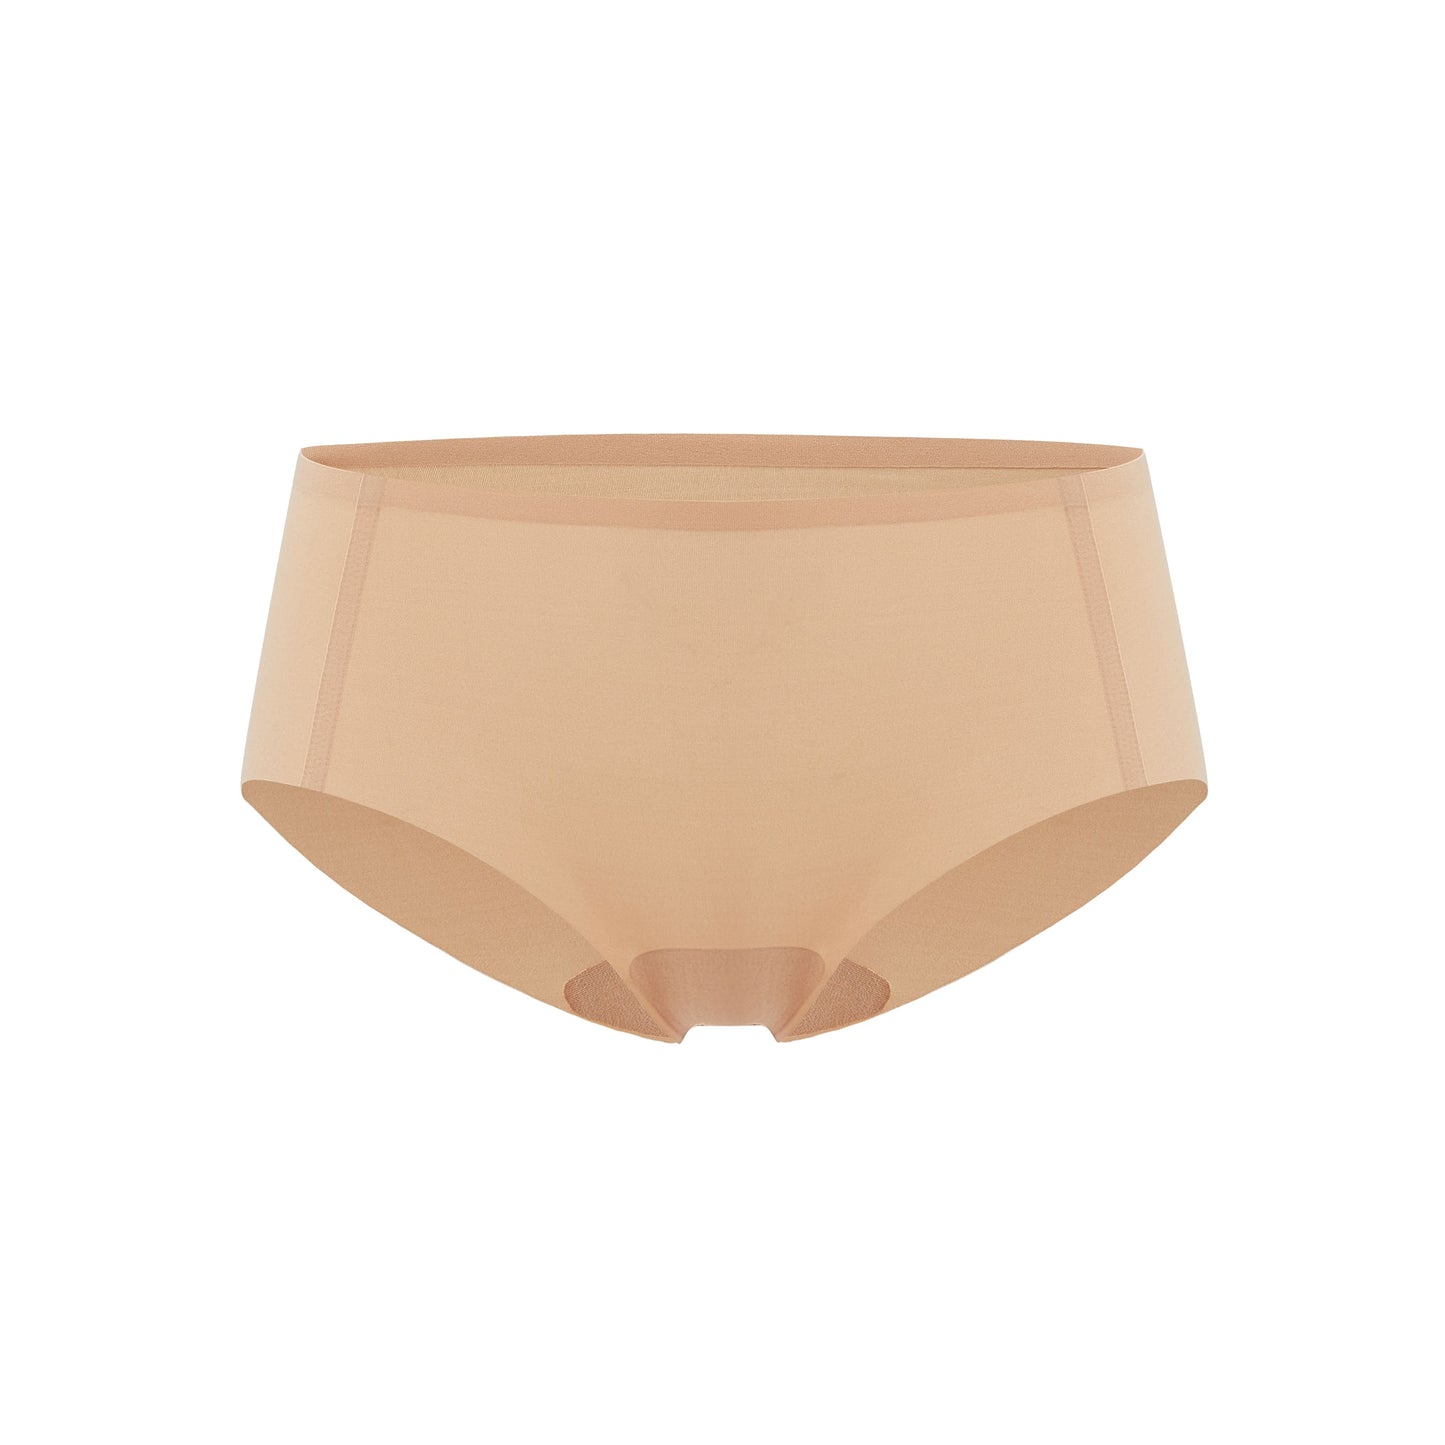 Flat lay image of tan underwear